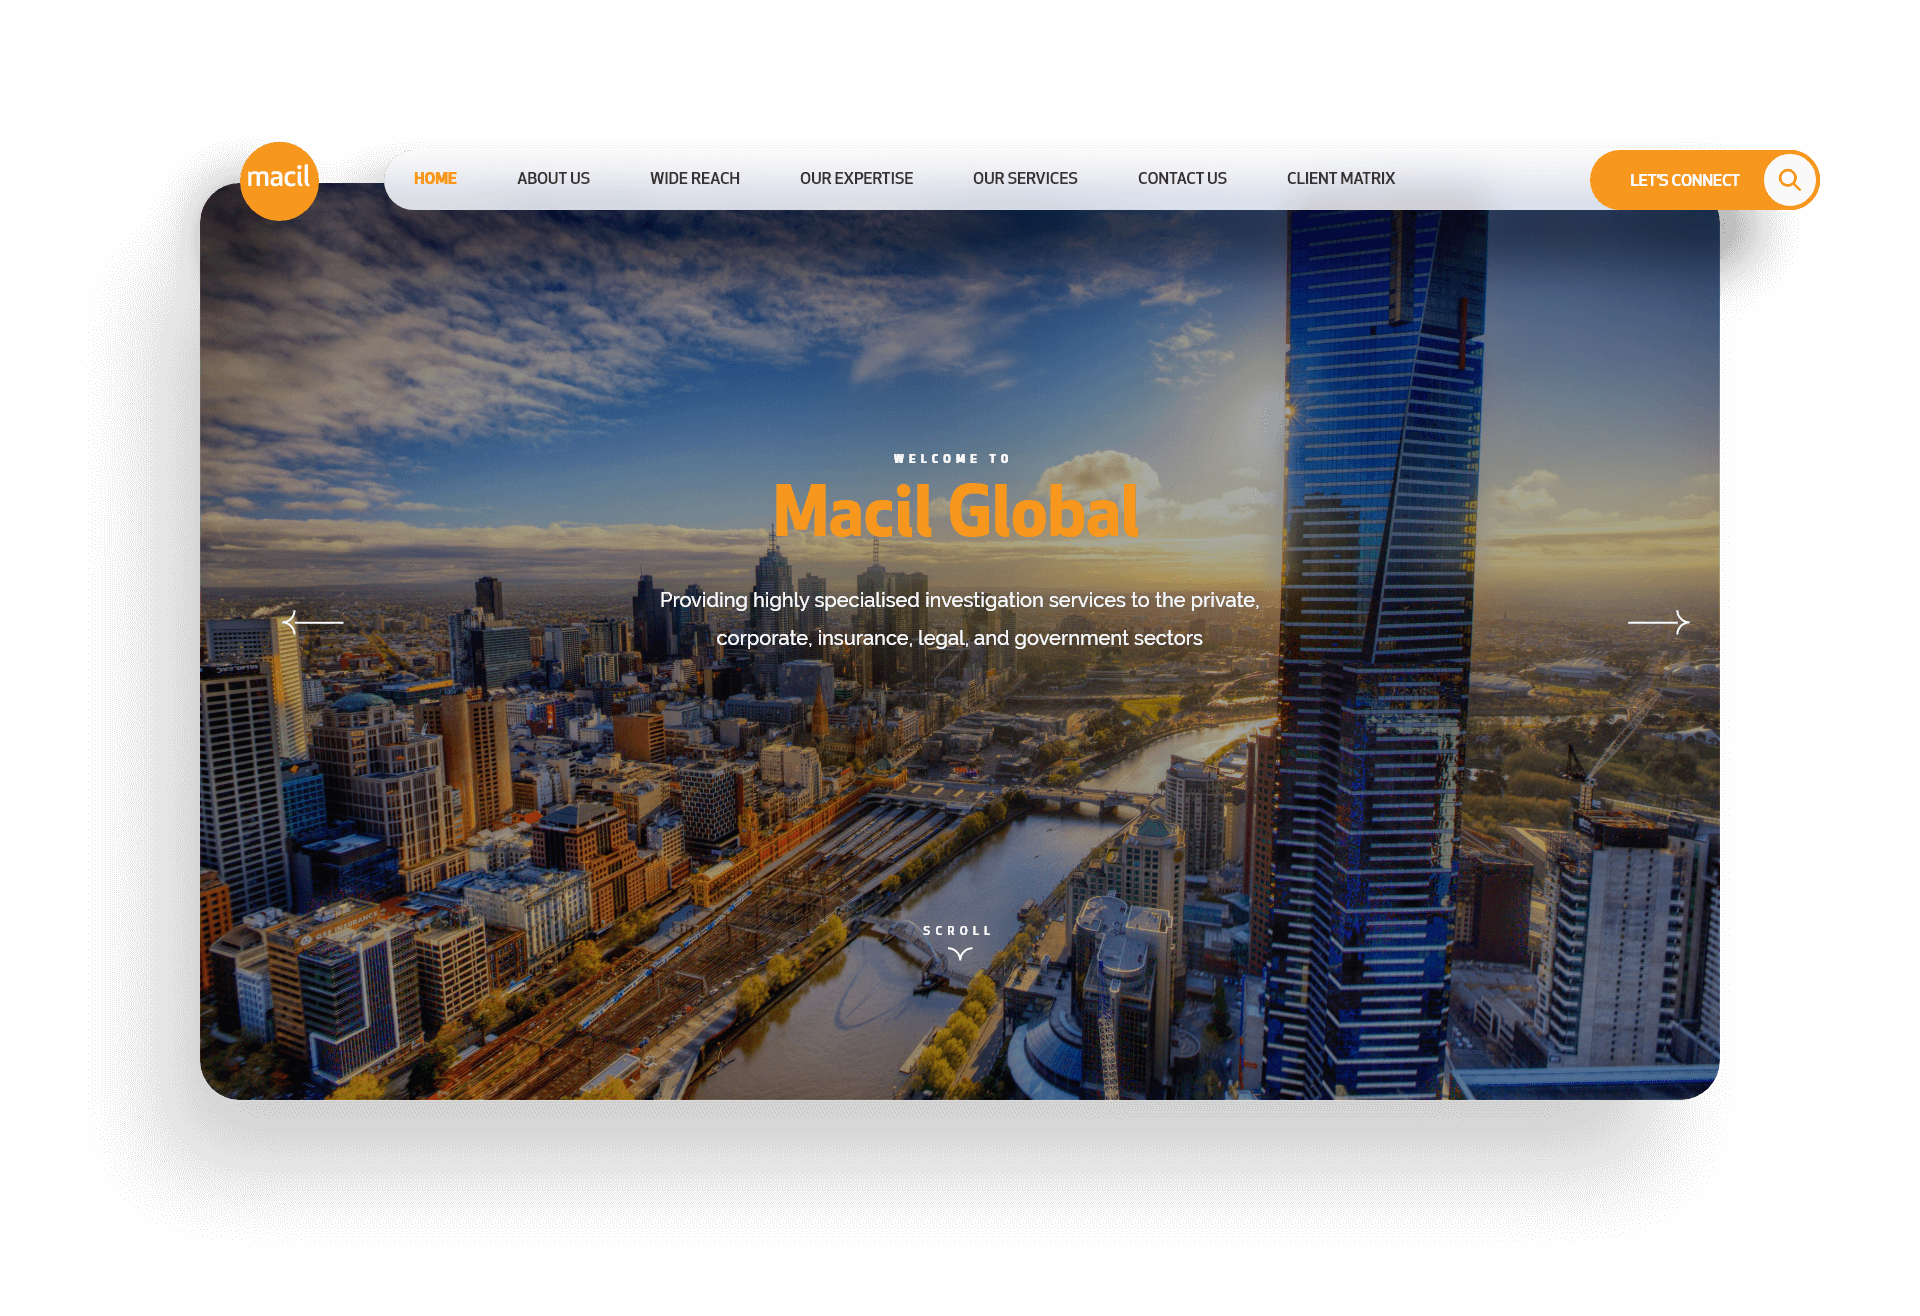 Homepage design of the Macil Global website